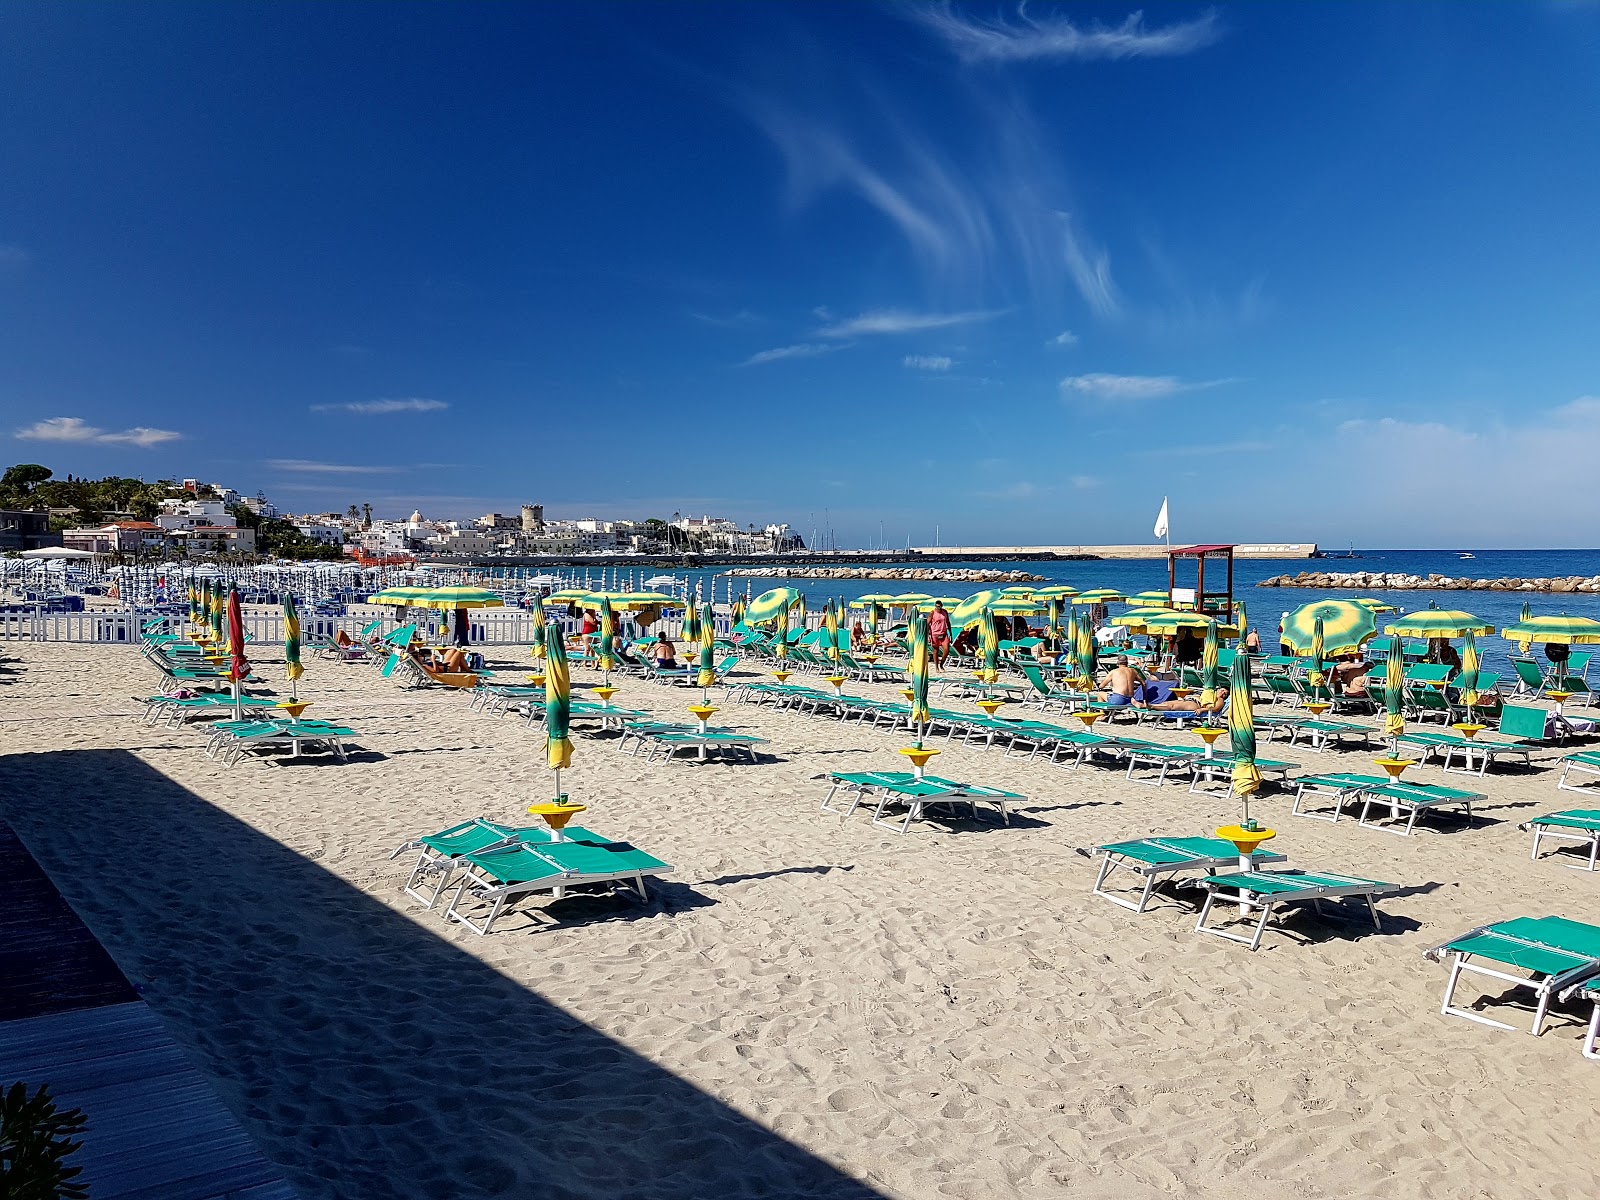 Foto van Spiaggia della Chiaia met ruime baai